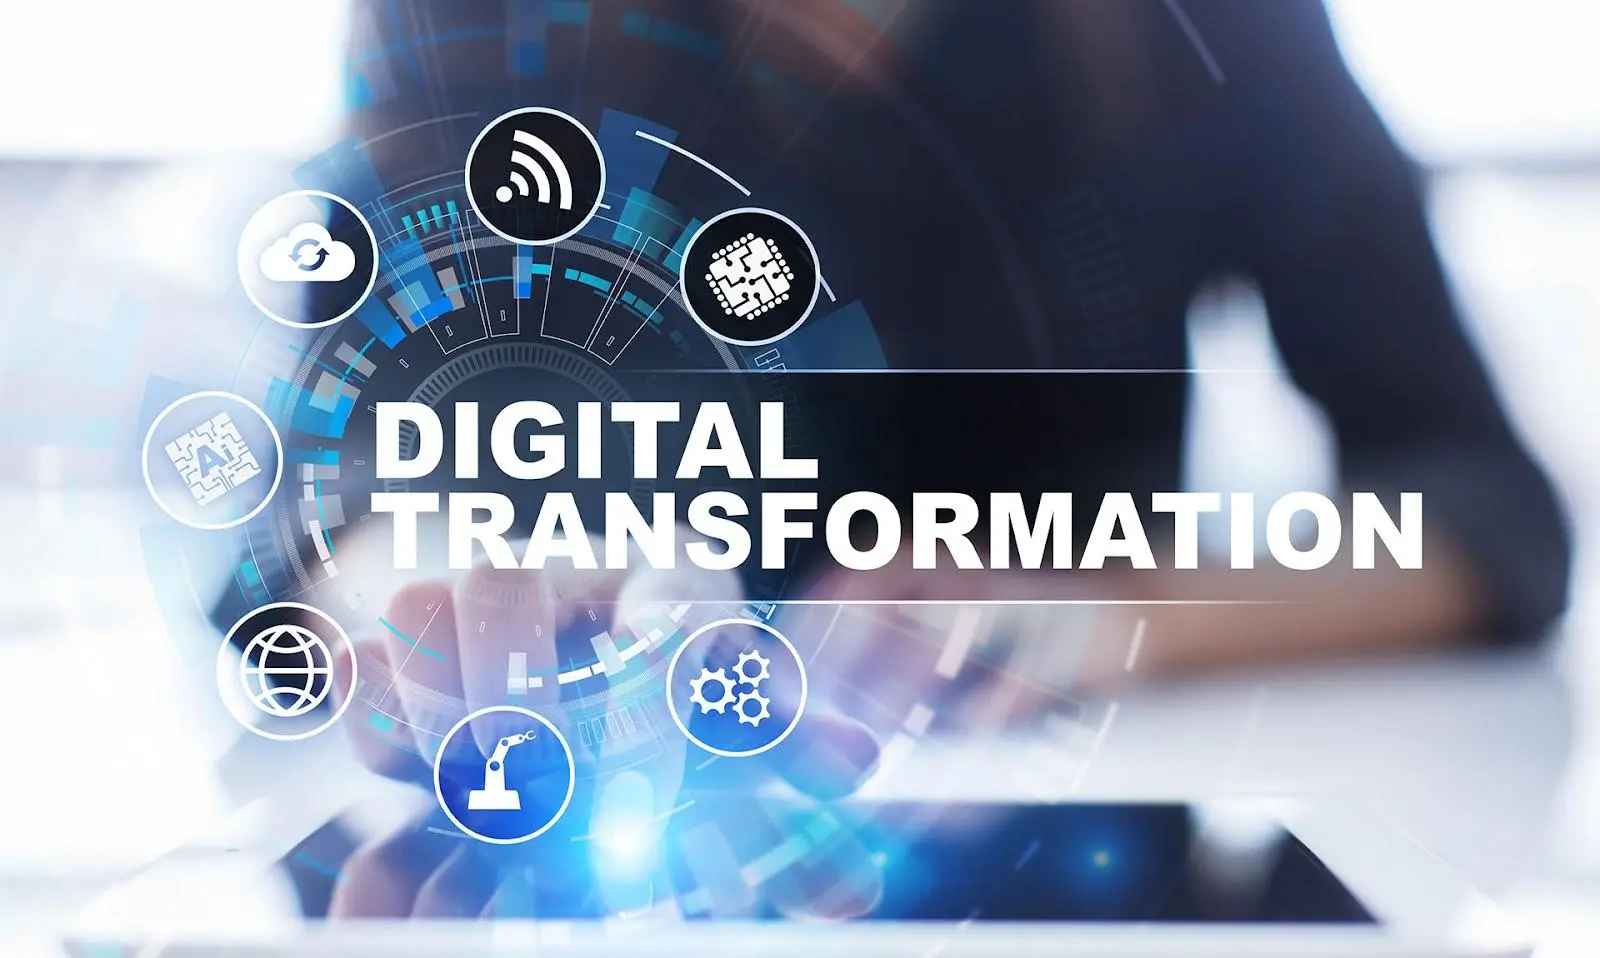 digital transformation and cloud adoption 2